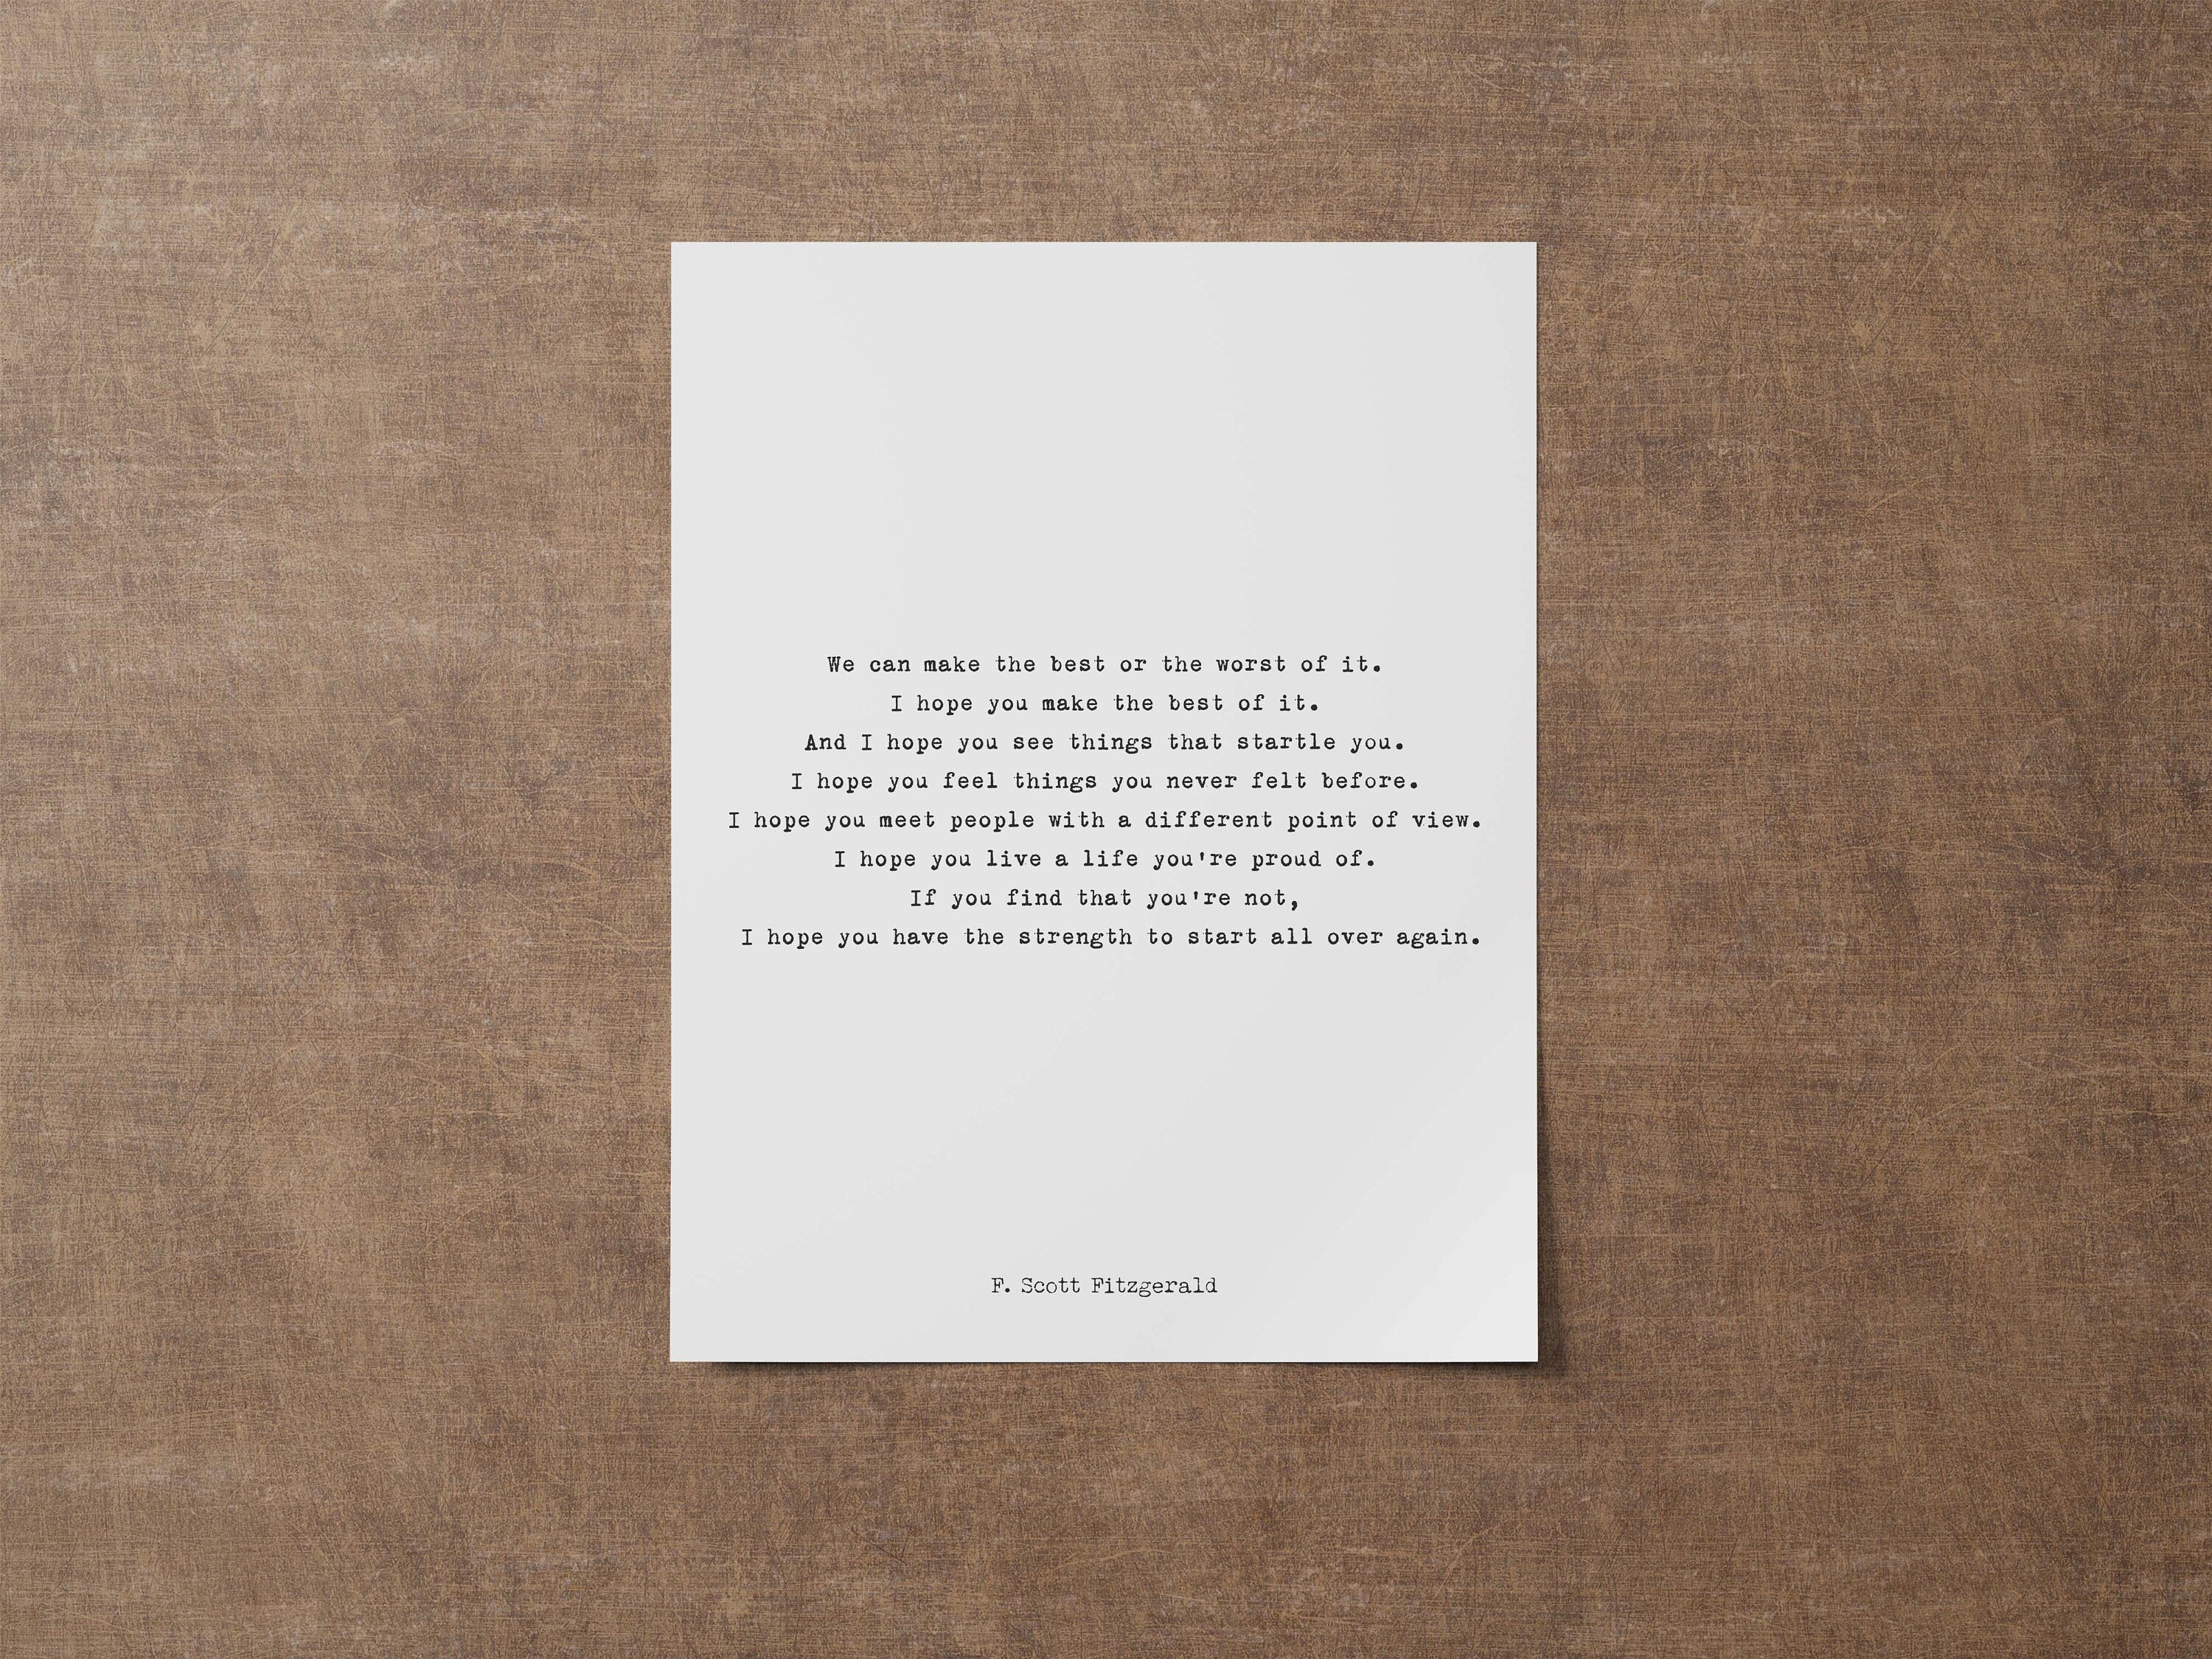 F Scott Fitzgerald Quote Inspirational Print, Make The Best Of It